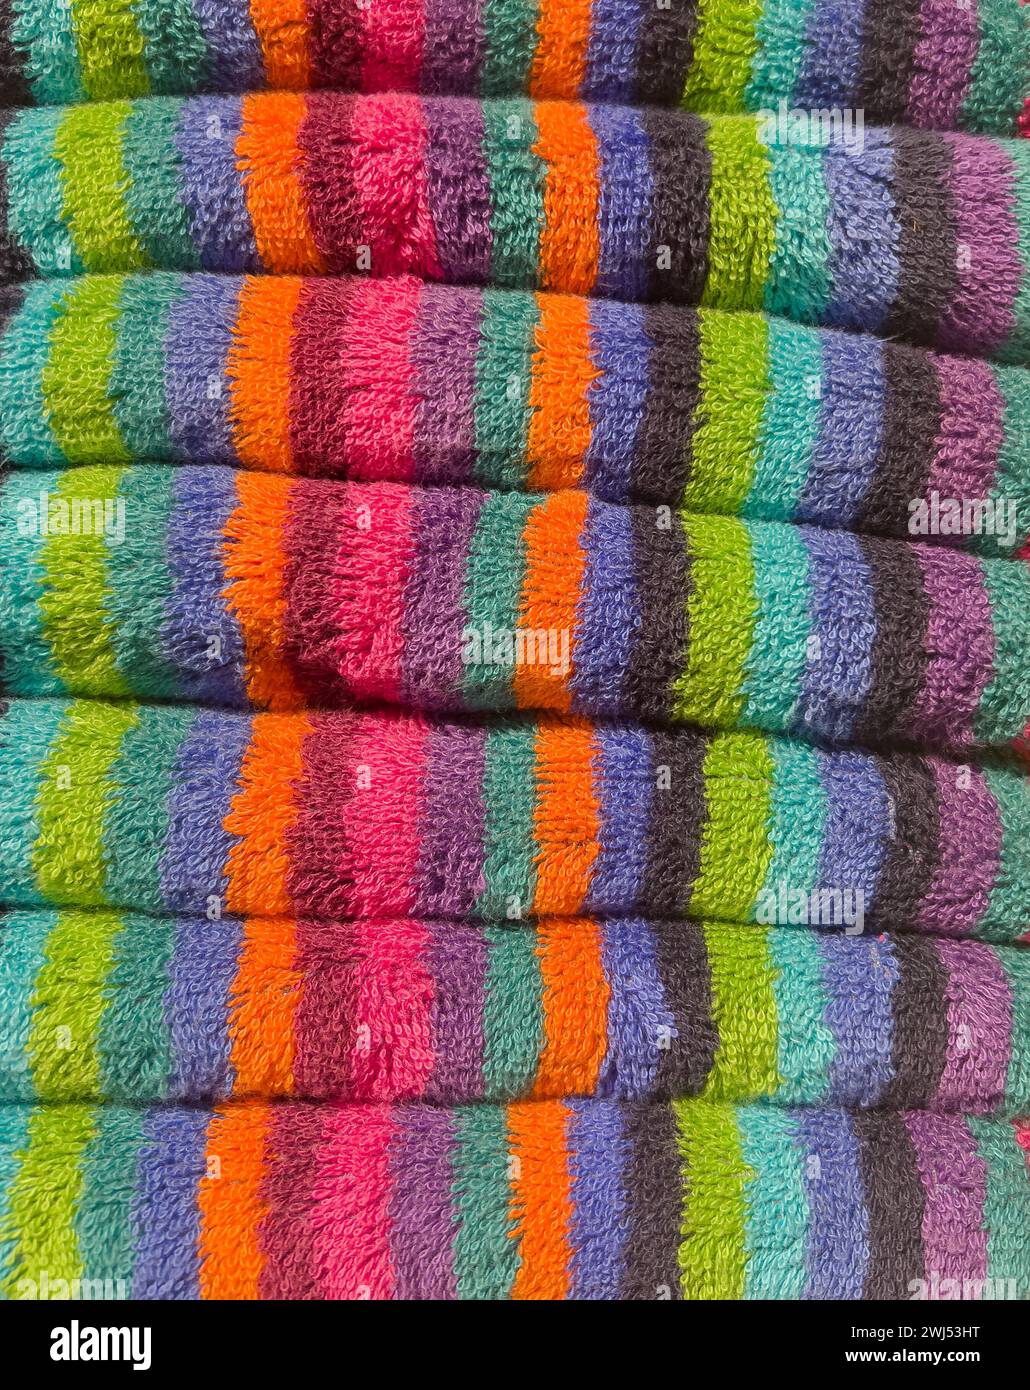 Coperta mista di lana colorata di alpaca, lana, mohair e lana angora Foto Stock